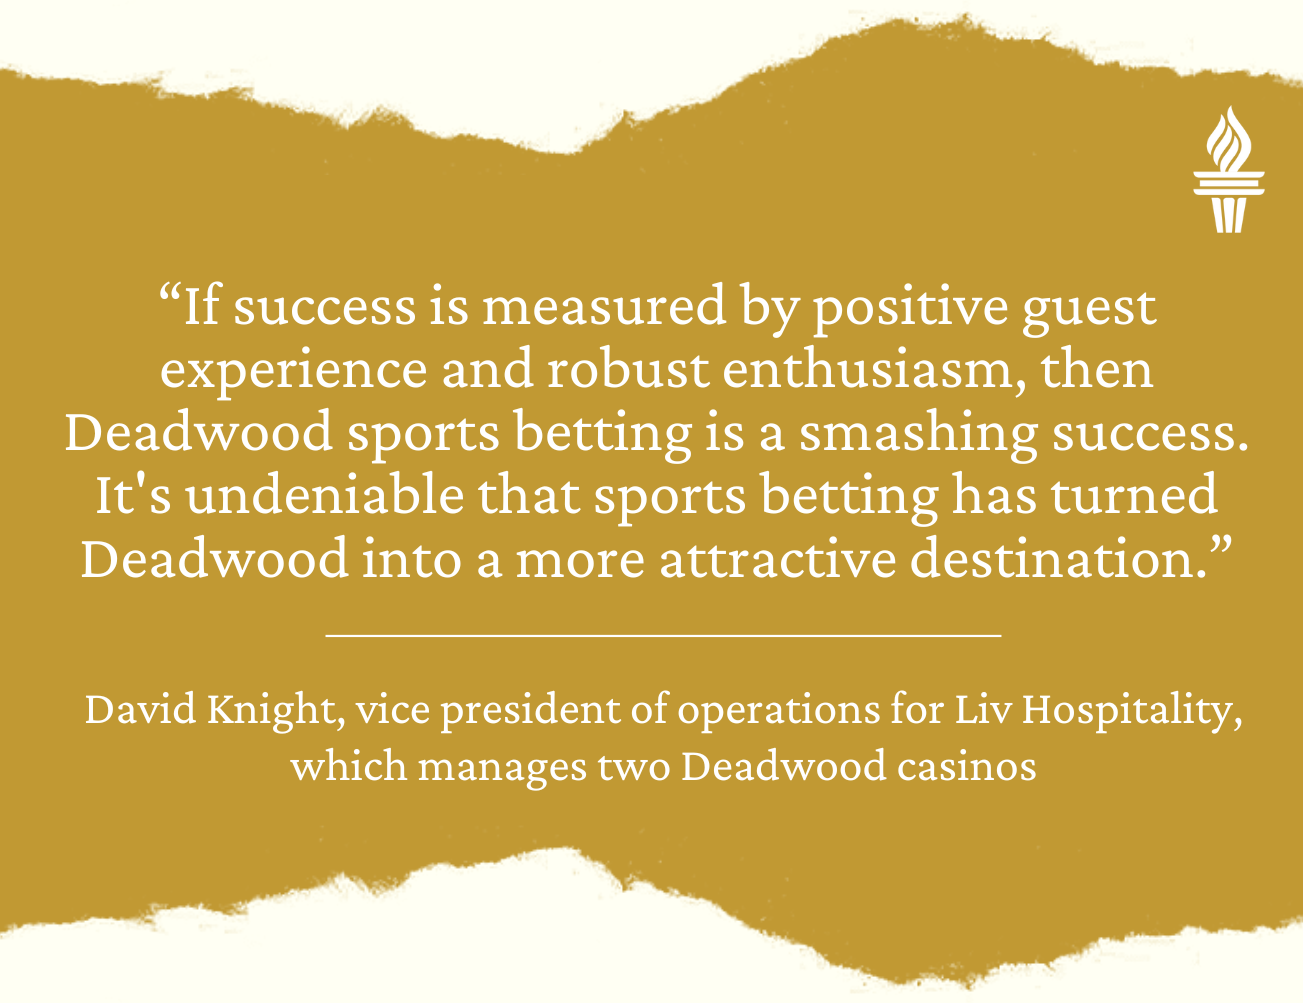 David Knight quote on sports betting in Deadwood, South Dakota